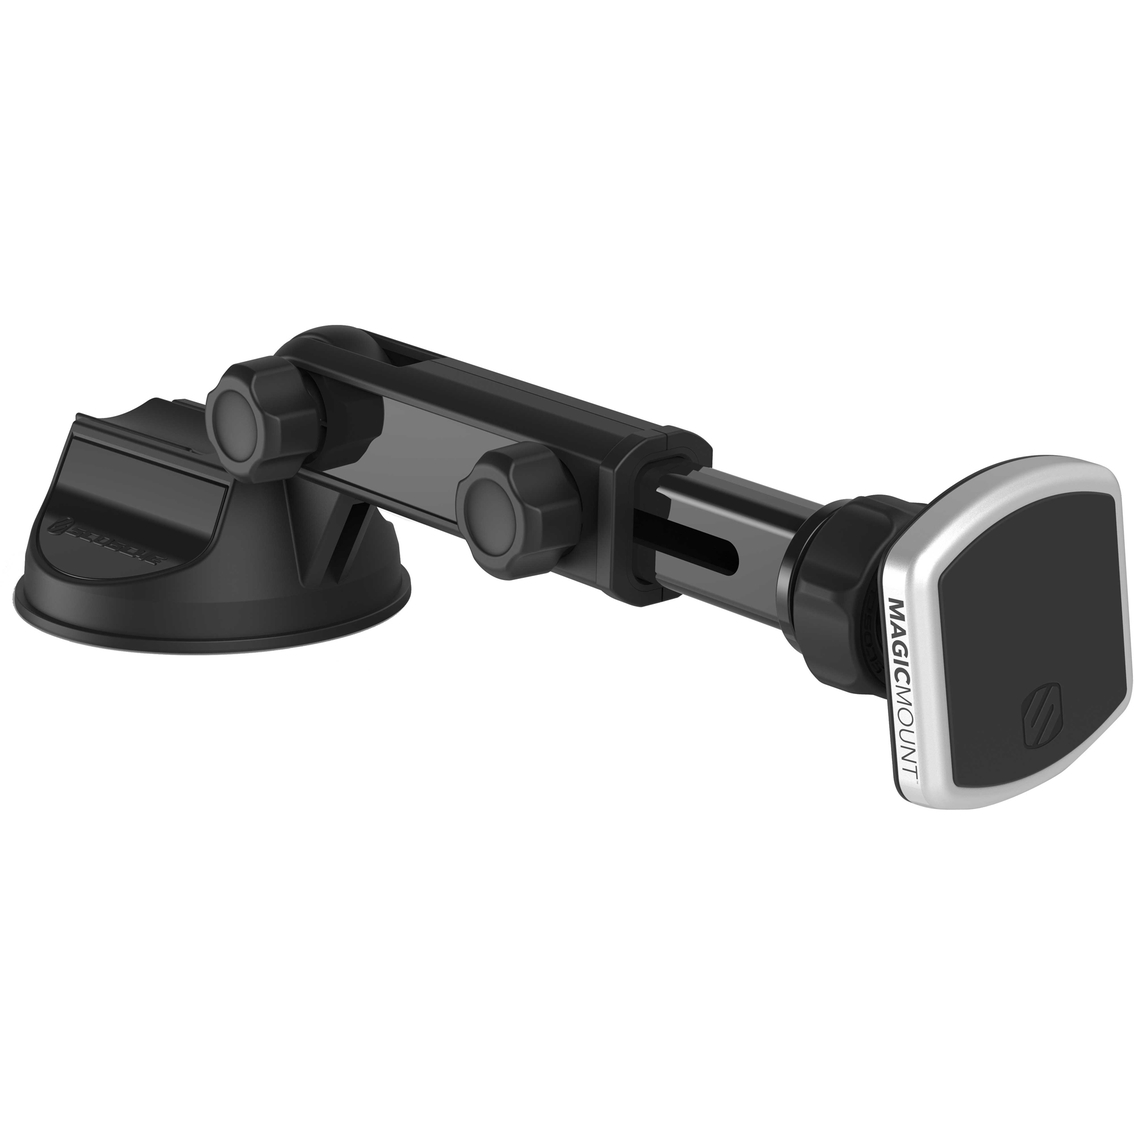 Scosche MagicMount Pro Telescoping Arm Phone Mount - Image 5 of 10